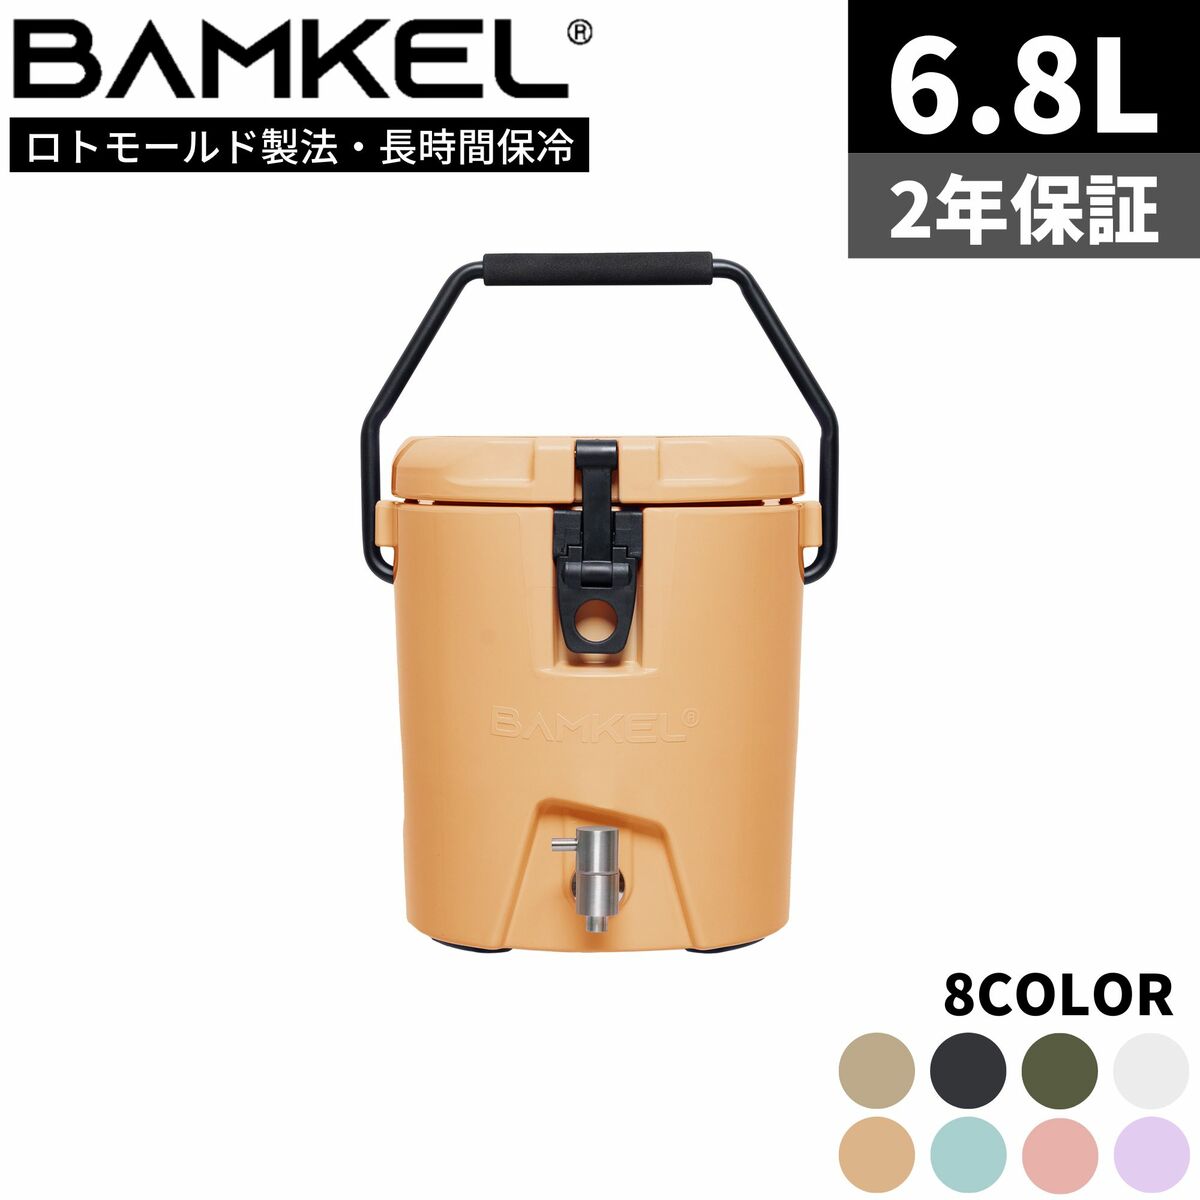 BAMKEL バンケル ウォータージャグ 6.8L 長時間 保冷 選べるカラー サイズ 高耐久 アウトドア キャンプ 韓国ブランド ライトブラウン 正規品